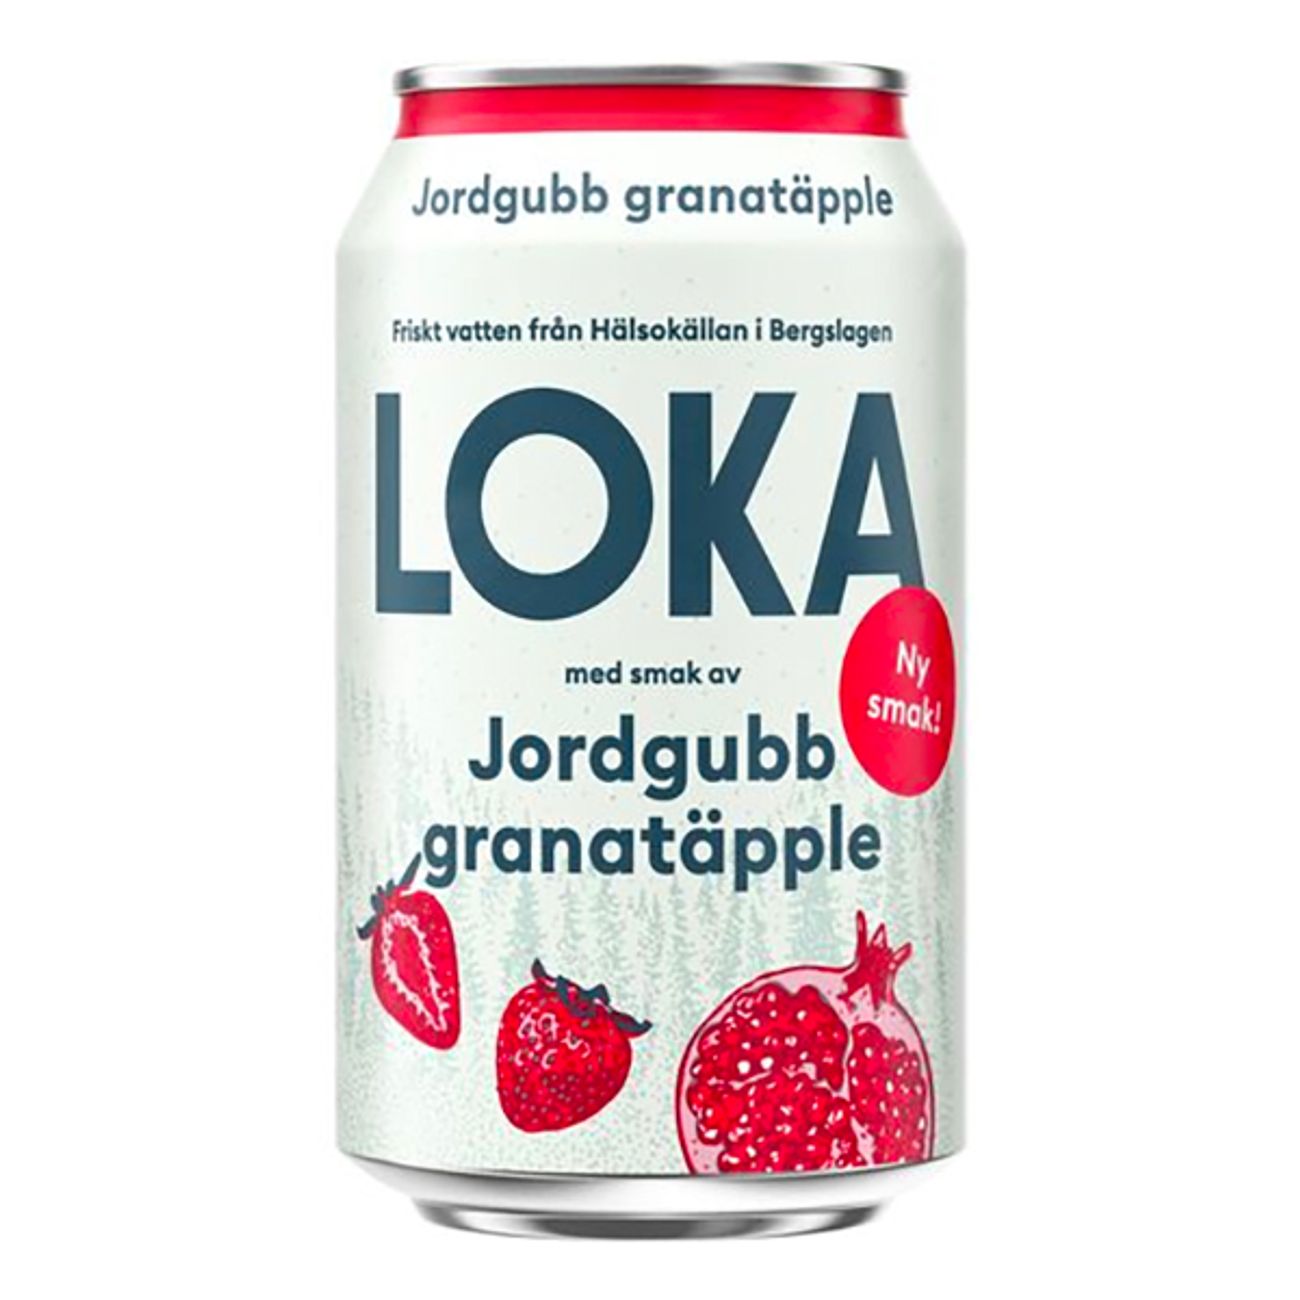 loka-jordgubbgranatapple-74941-1